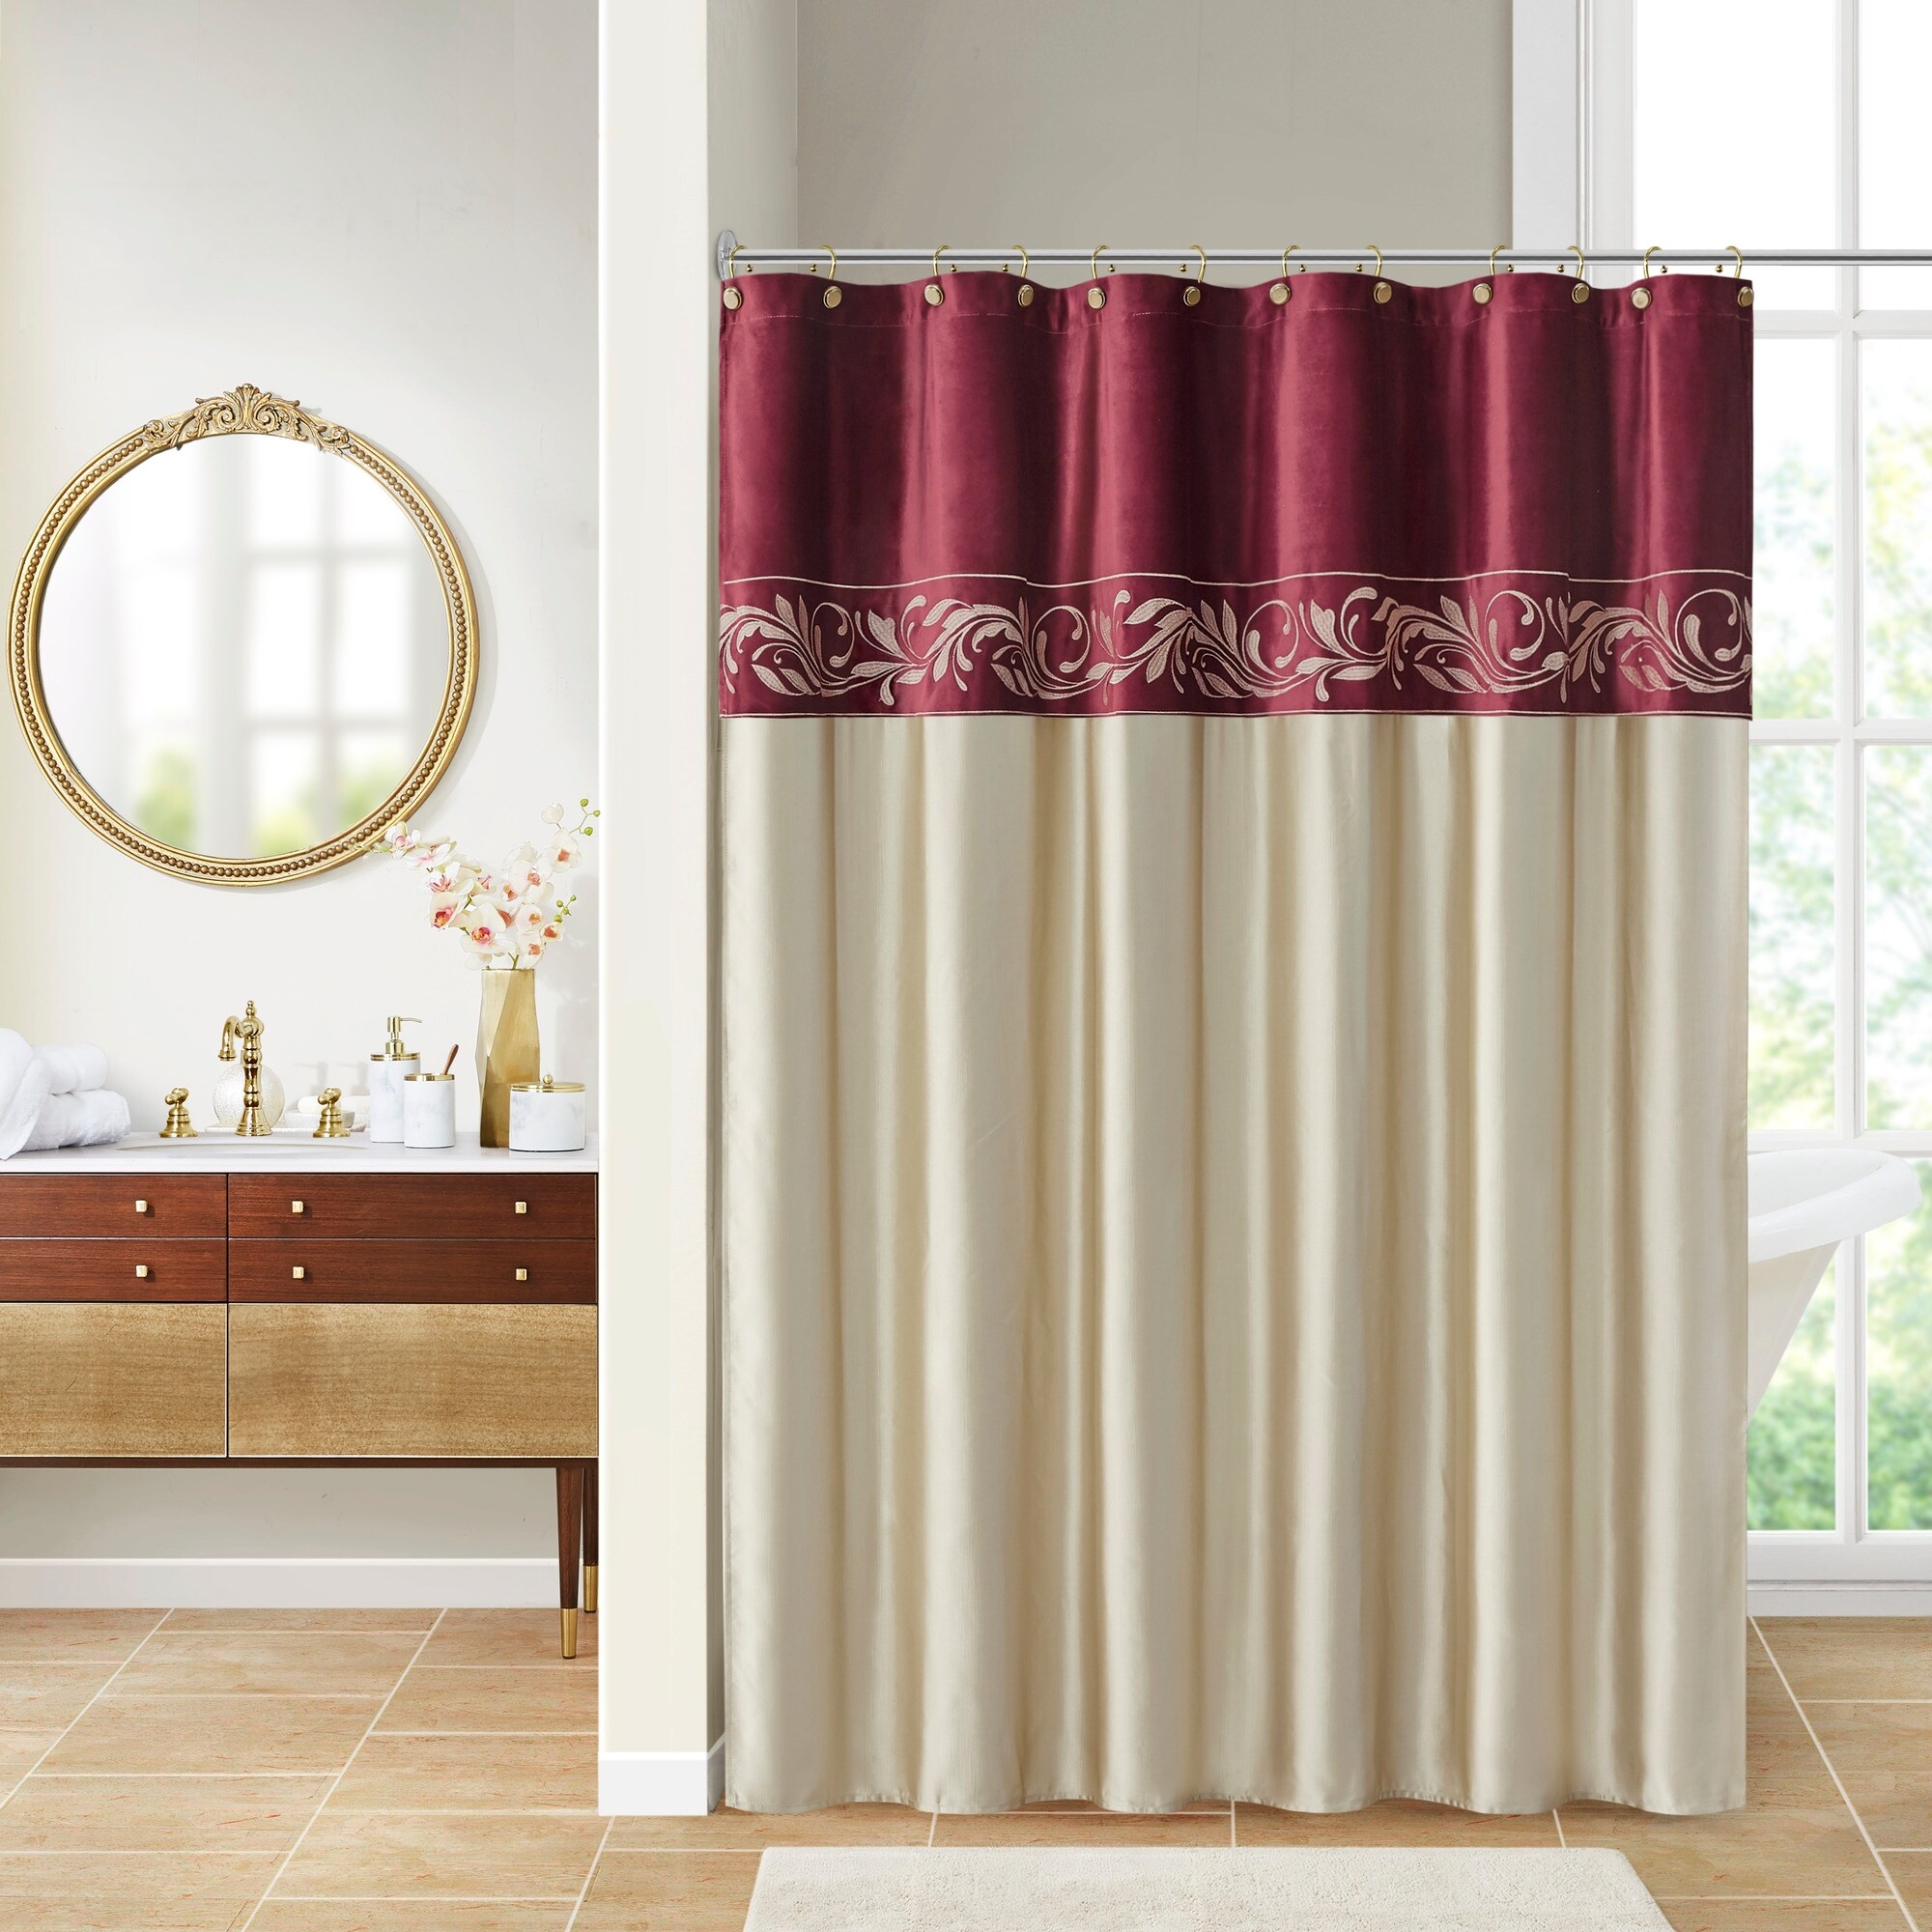 72 x 72 Croscill Shower Curtains - Bed Bath & Beyond